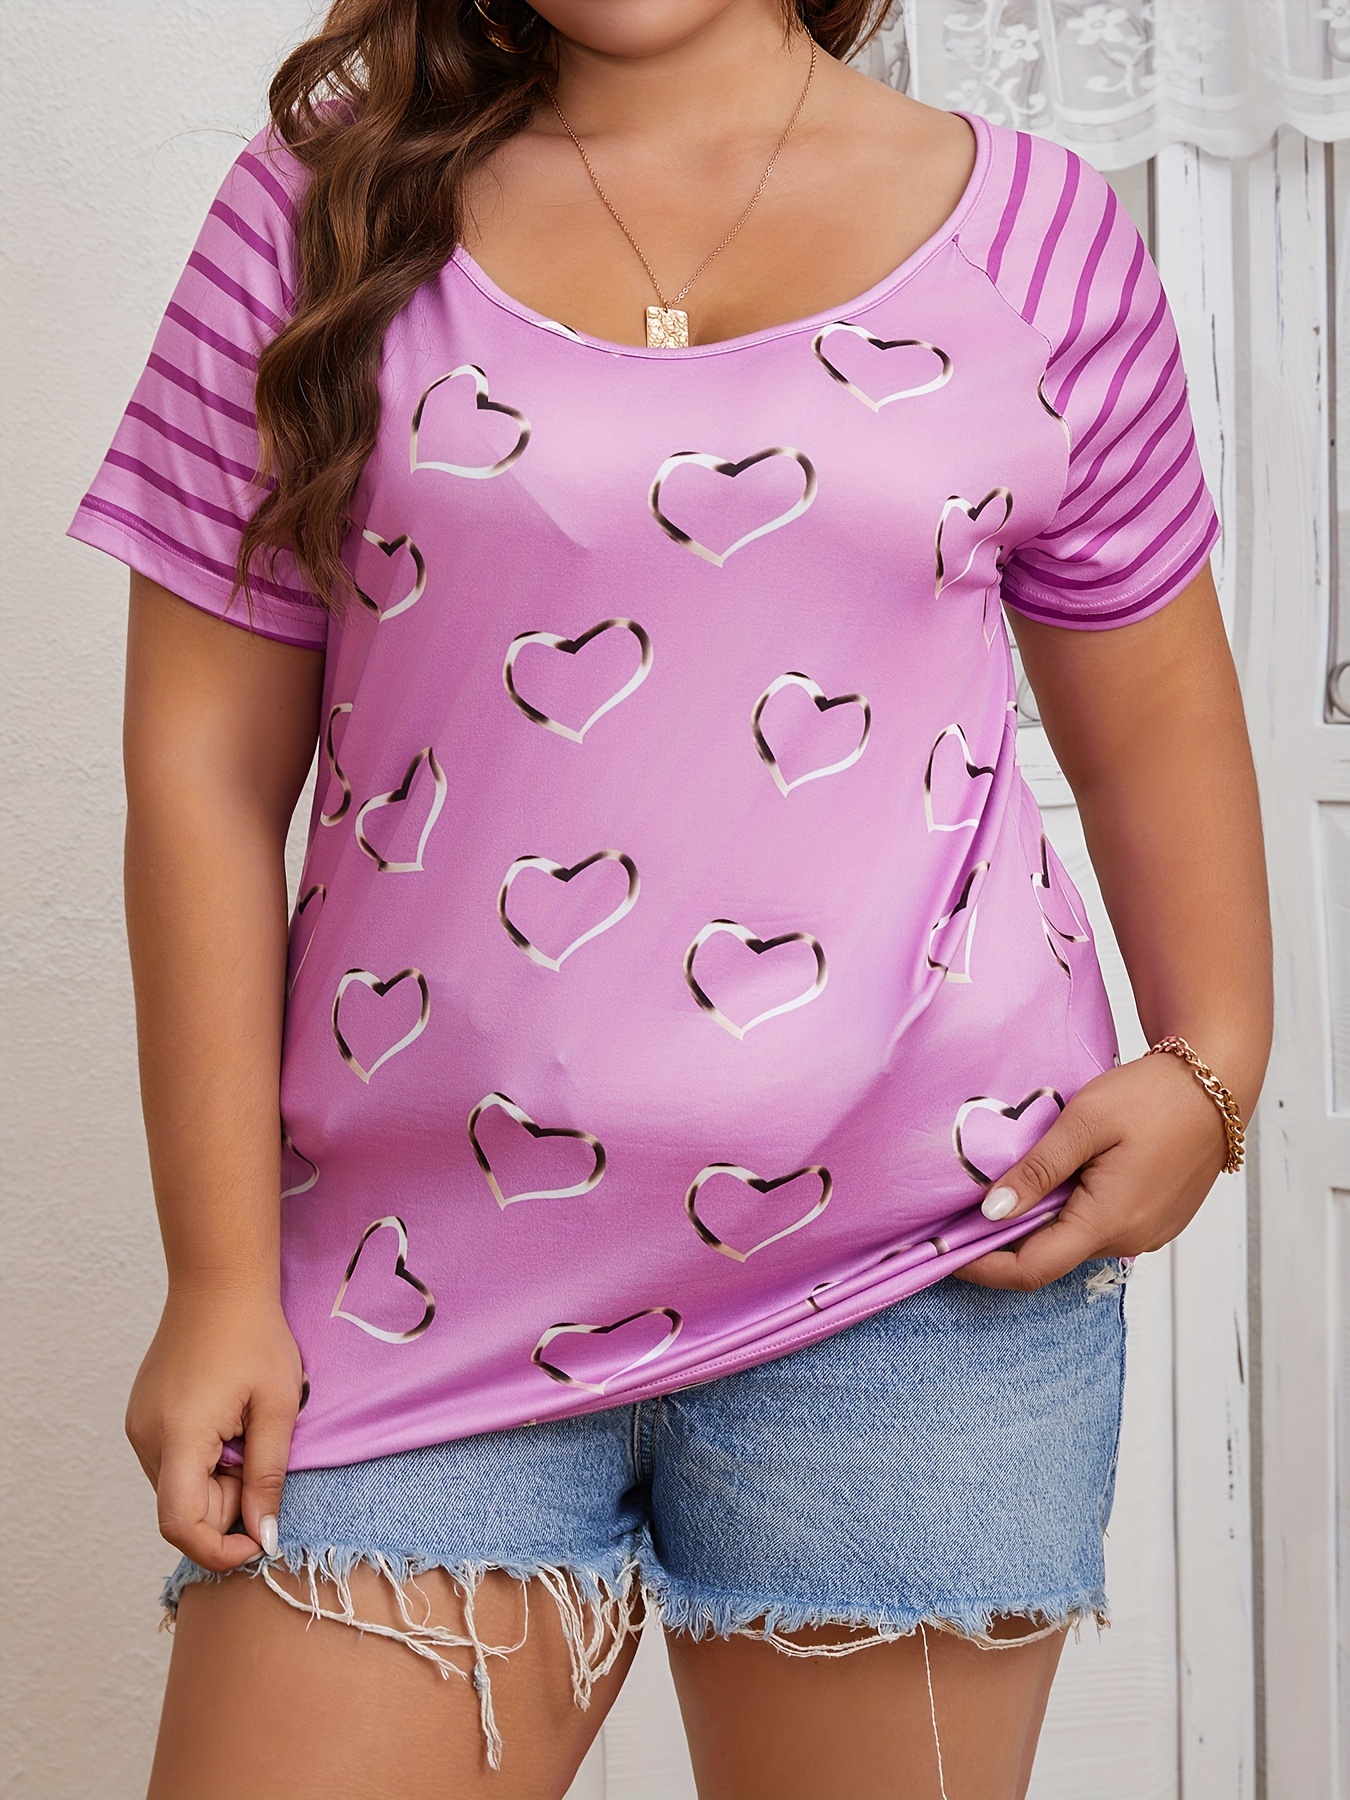  Womens Plus Size Tops Hot Pink Heart Shirts Short